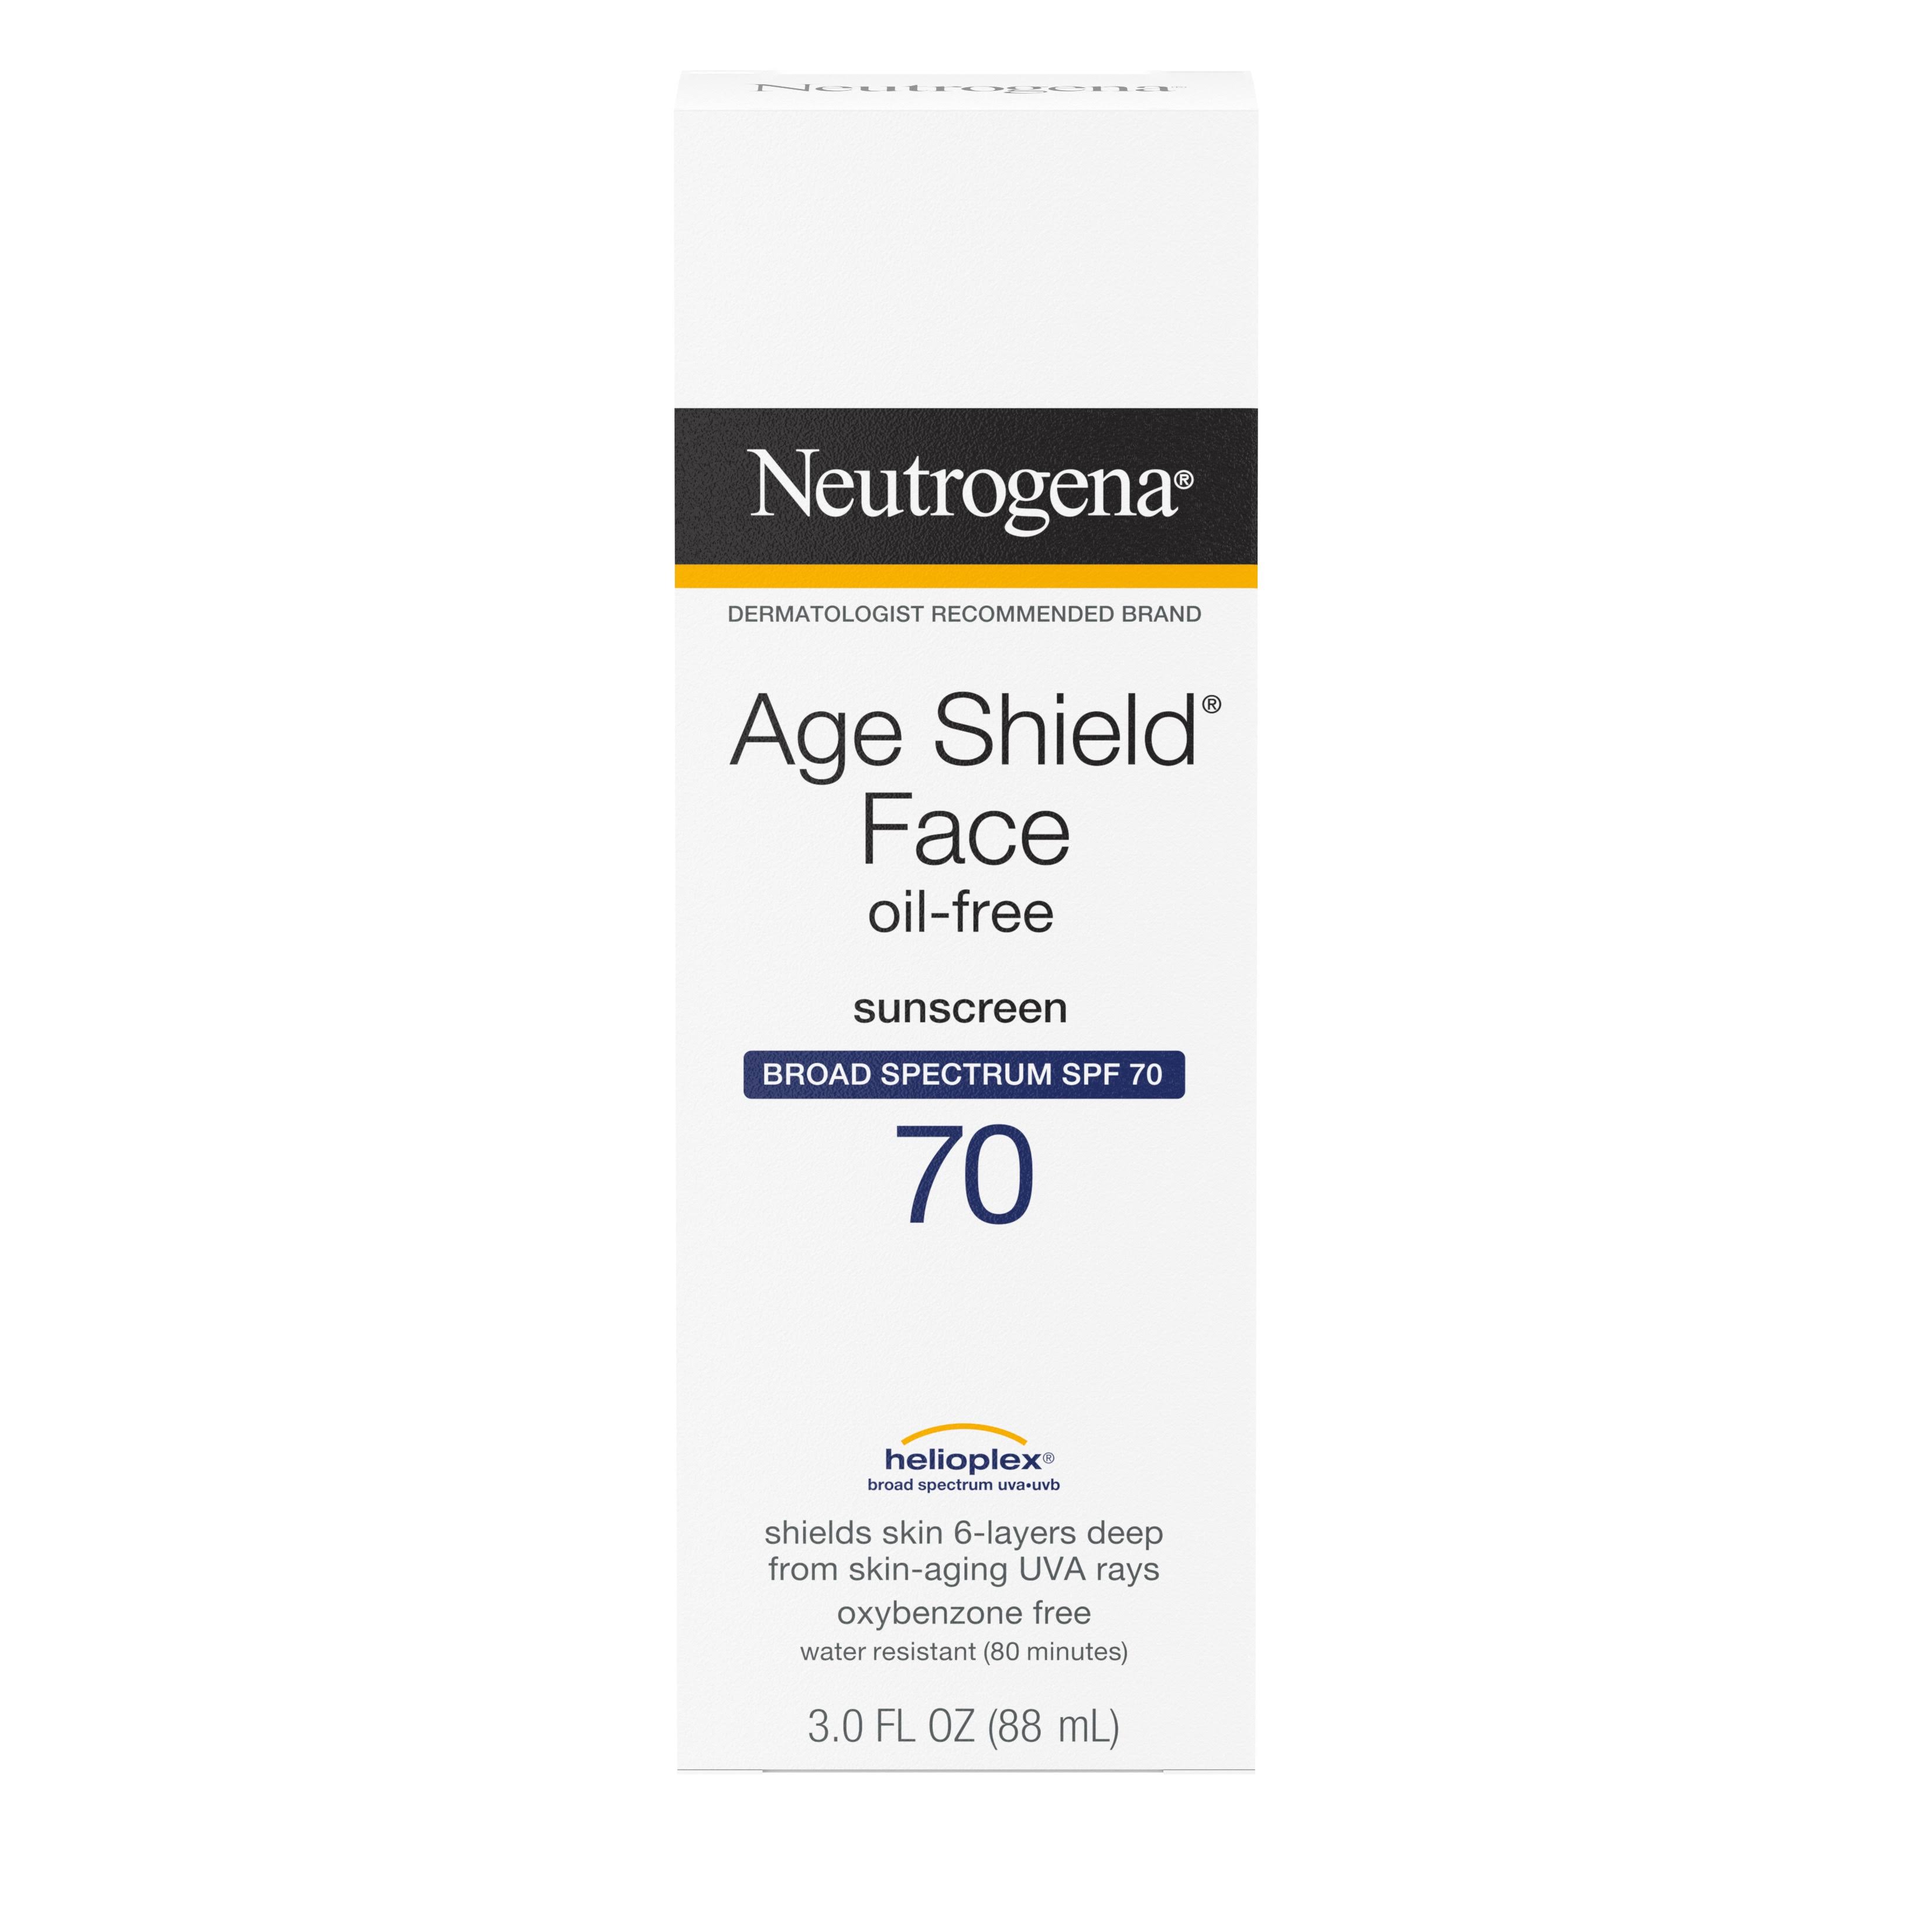 Neutrogena Age Shield Helioplex 360 Sunscreen Face Lotion - SPF 70, 88ml